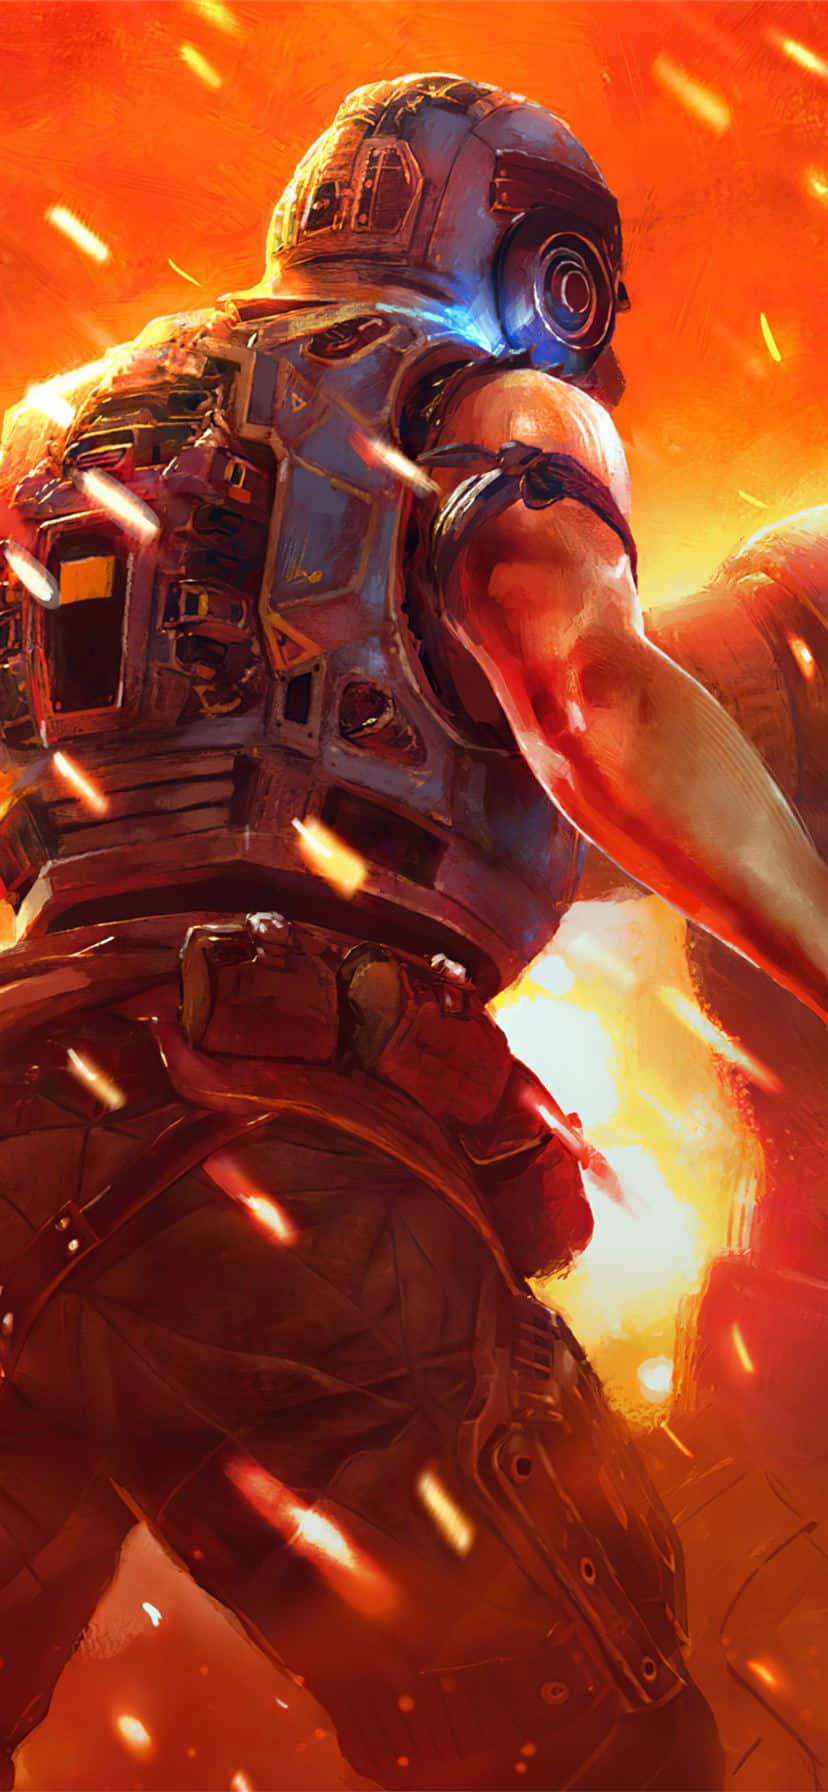 Iphonexs Hintergrund Mit Rückansicht Des Charakters Aus Gears Of War 5